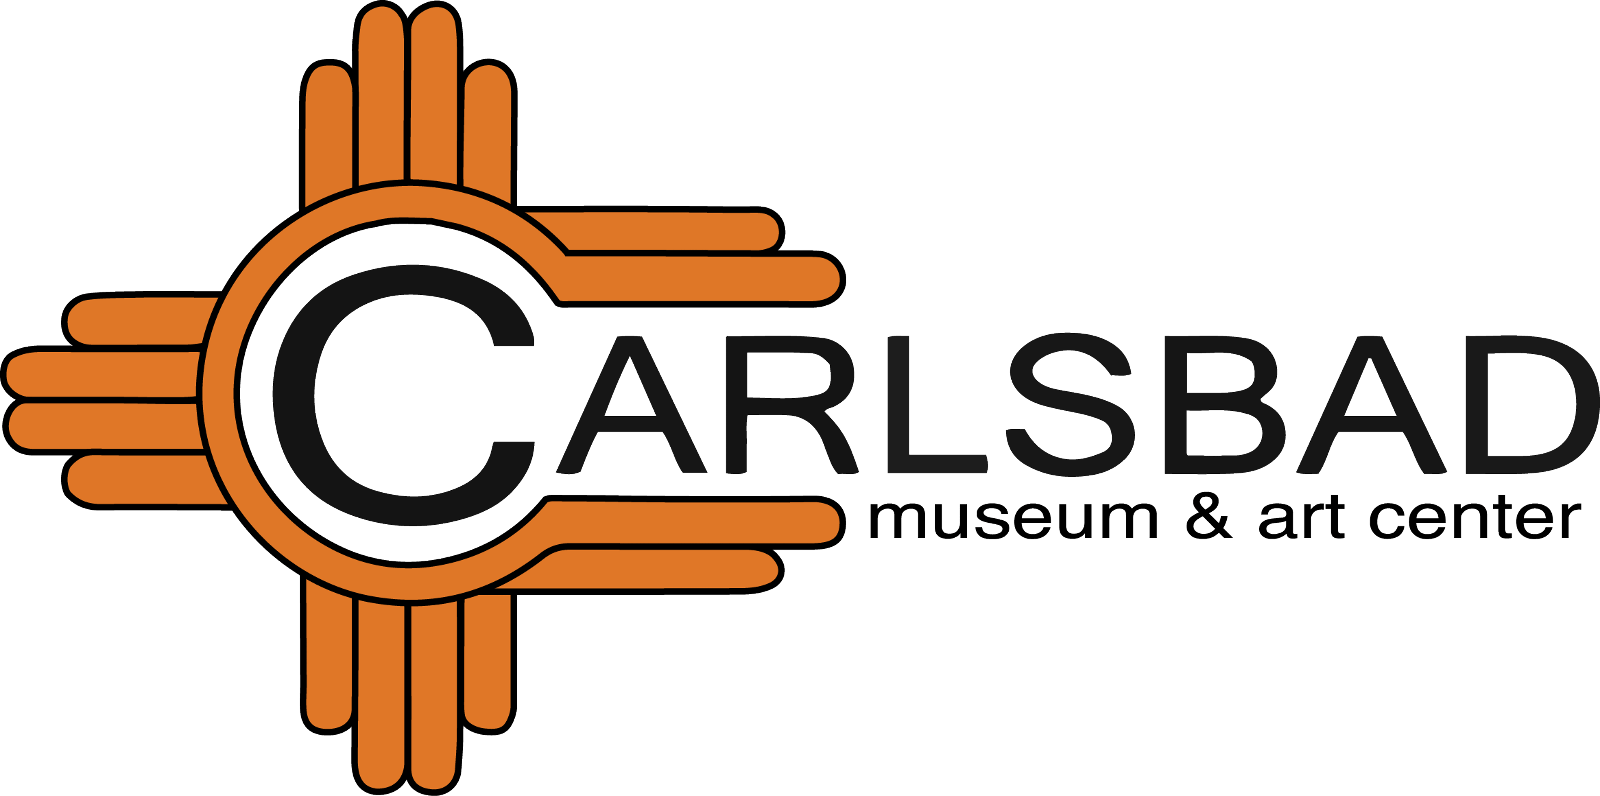 Carlsbad Logo - Carlsbad Museum and Art Center | Carlsbad, New Mexico - Official ...